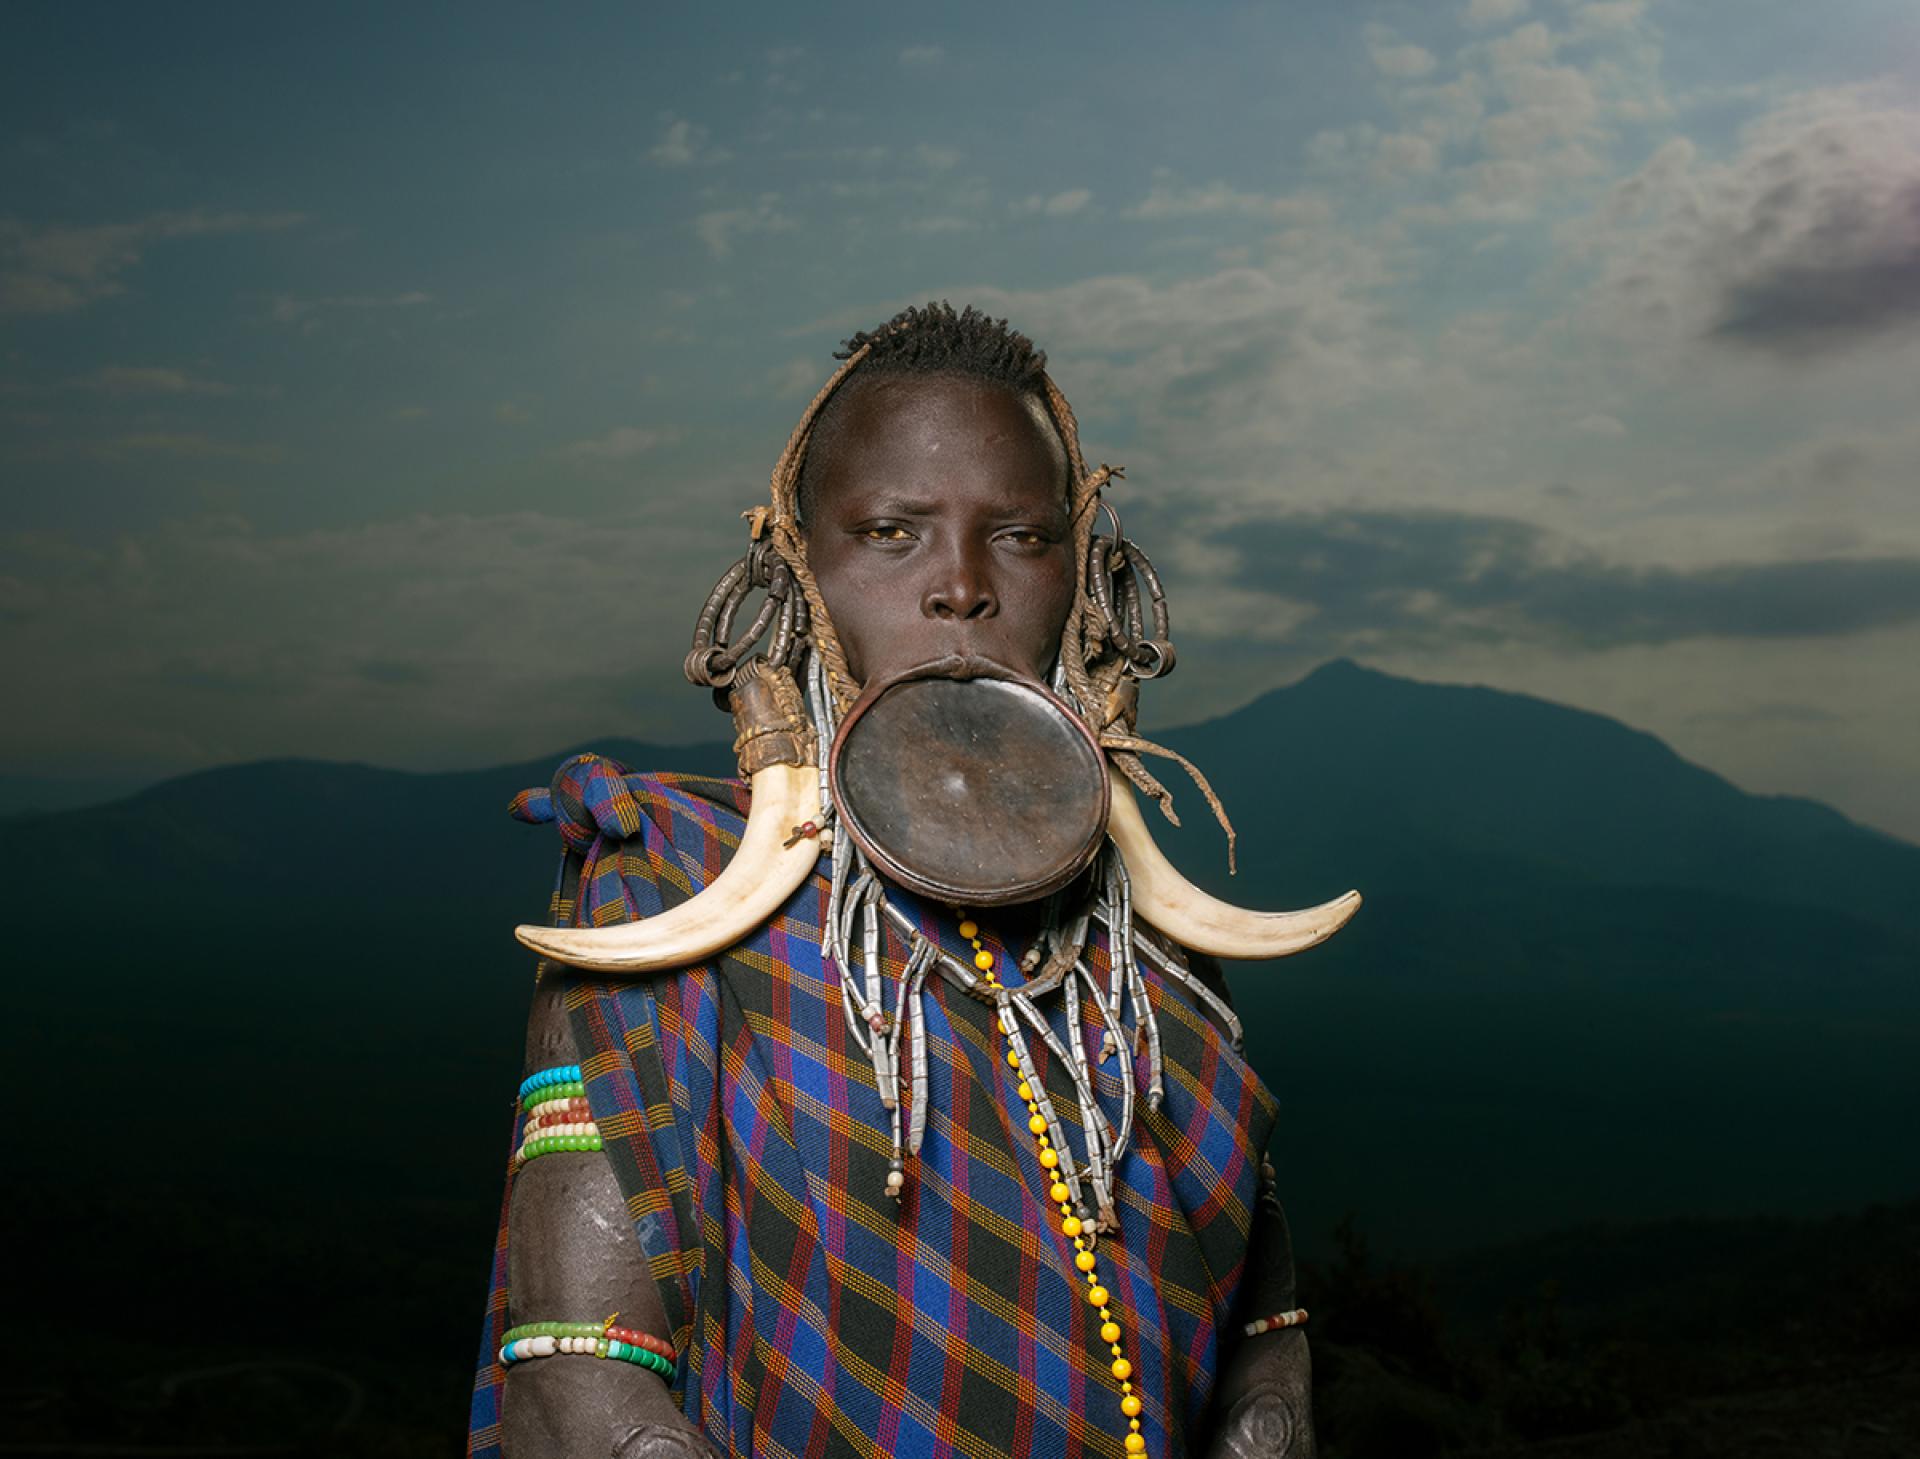 London Photography Awards Winner - Indigenous Beauty